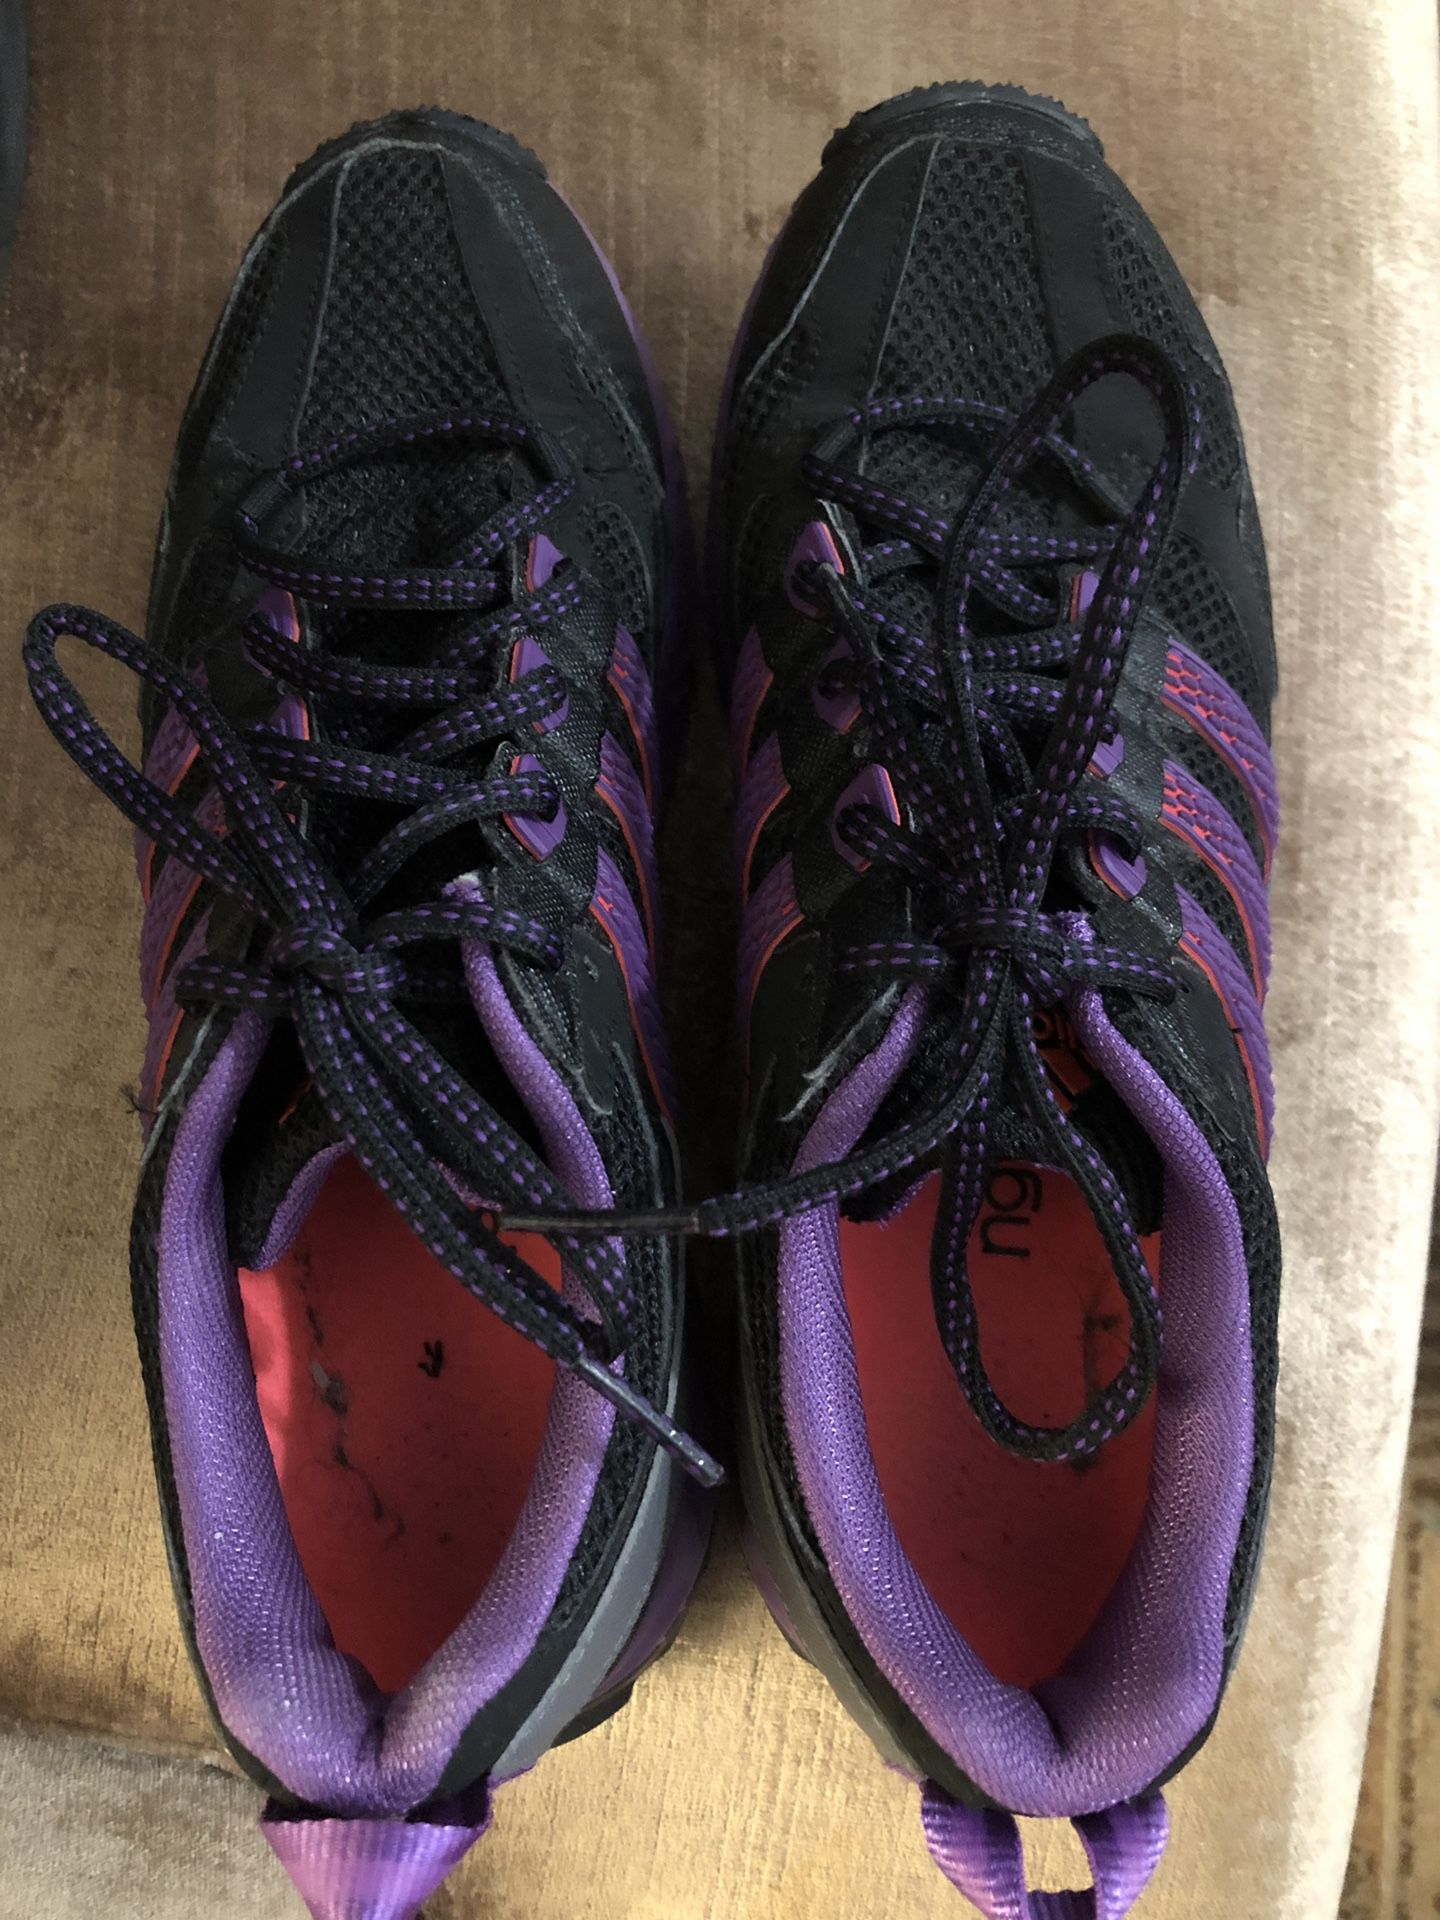 Adidas kanadia tr5 running trail shoe. Women’s size 9.